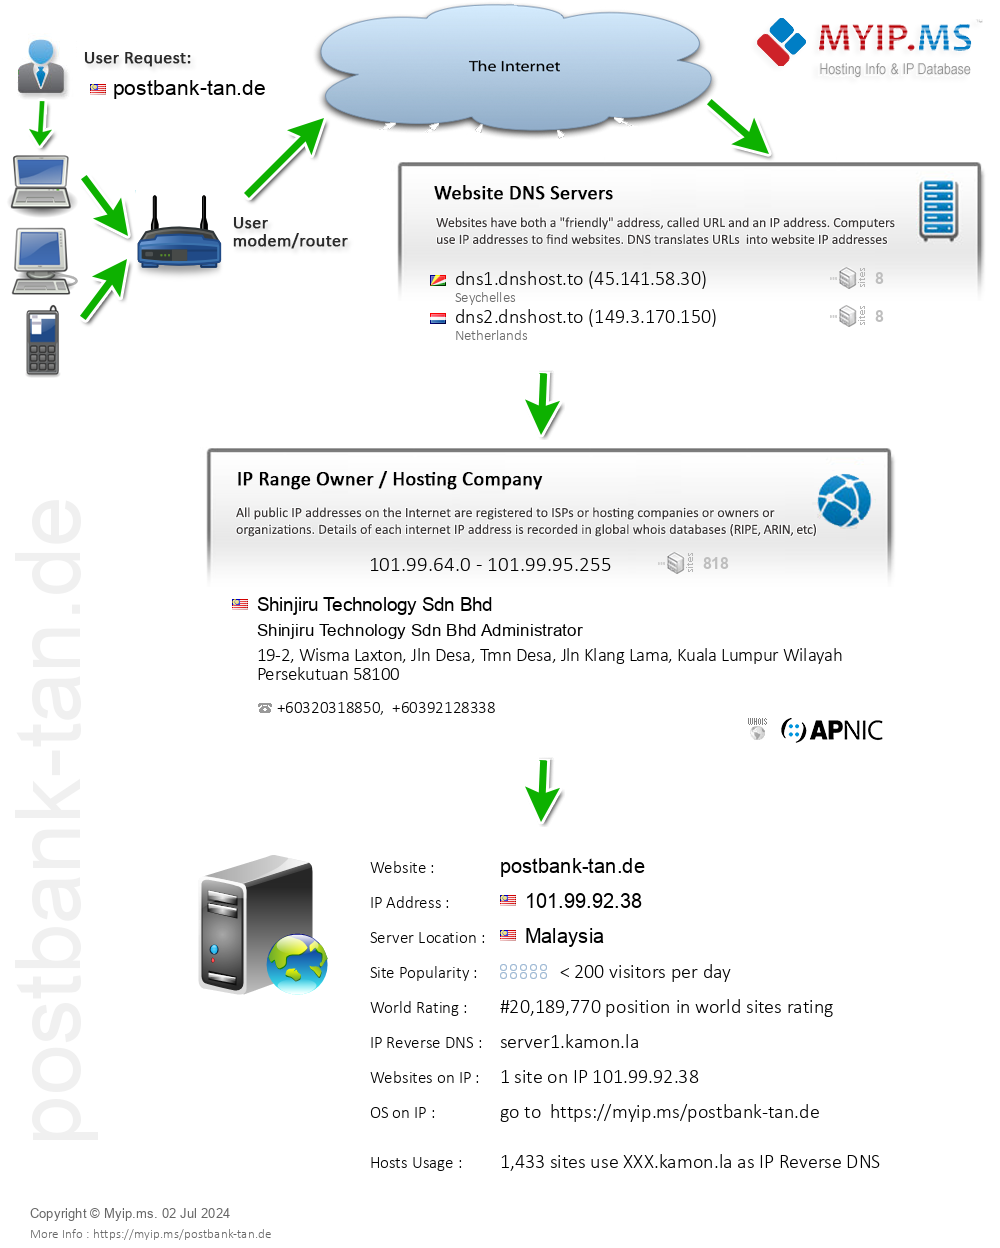 Postbank-tan.de - Website Hosting Visual IP Diagram